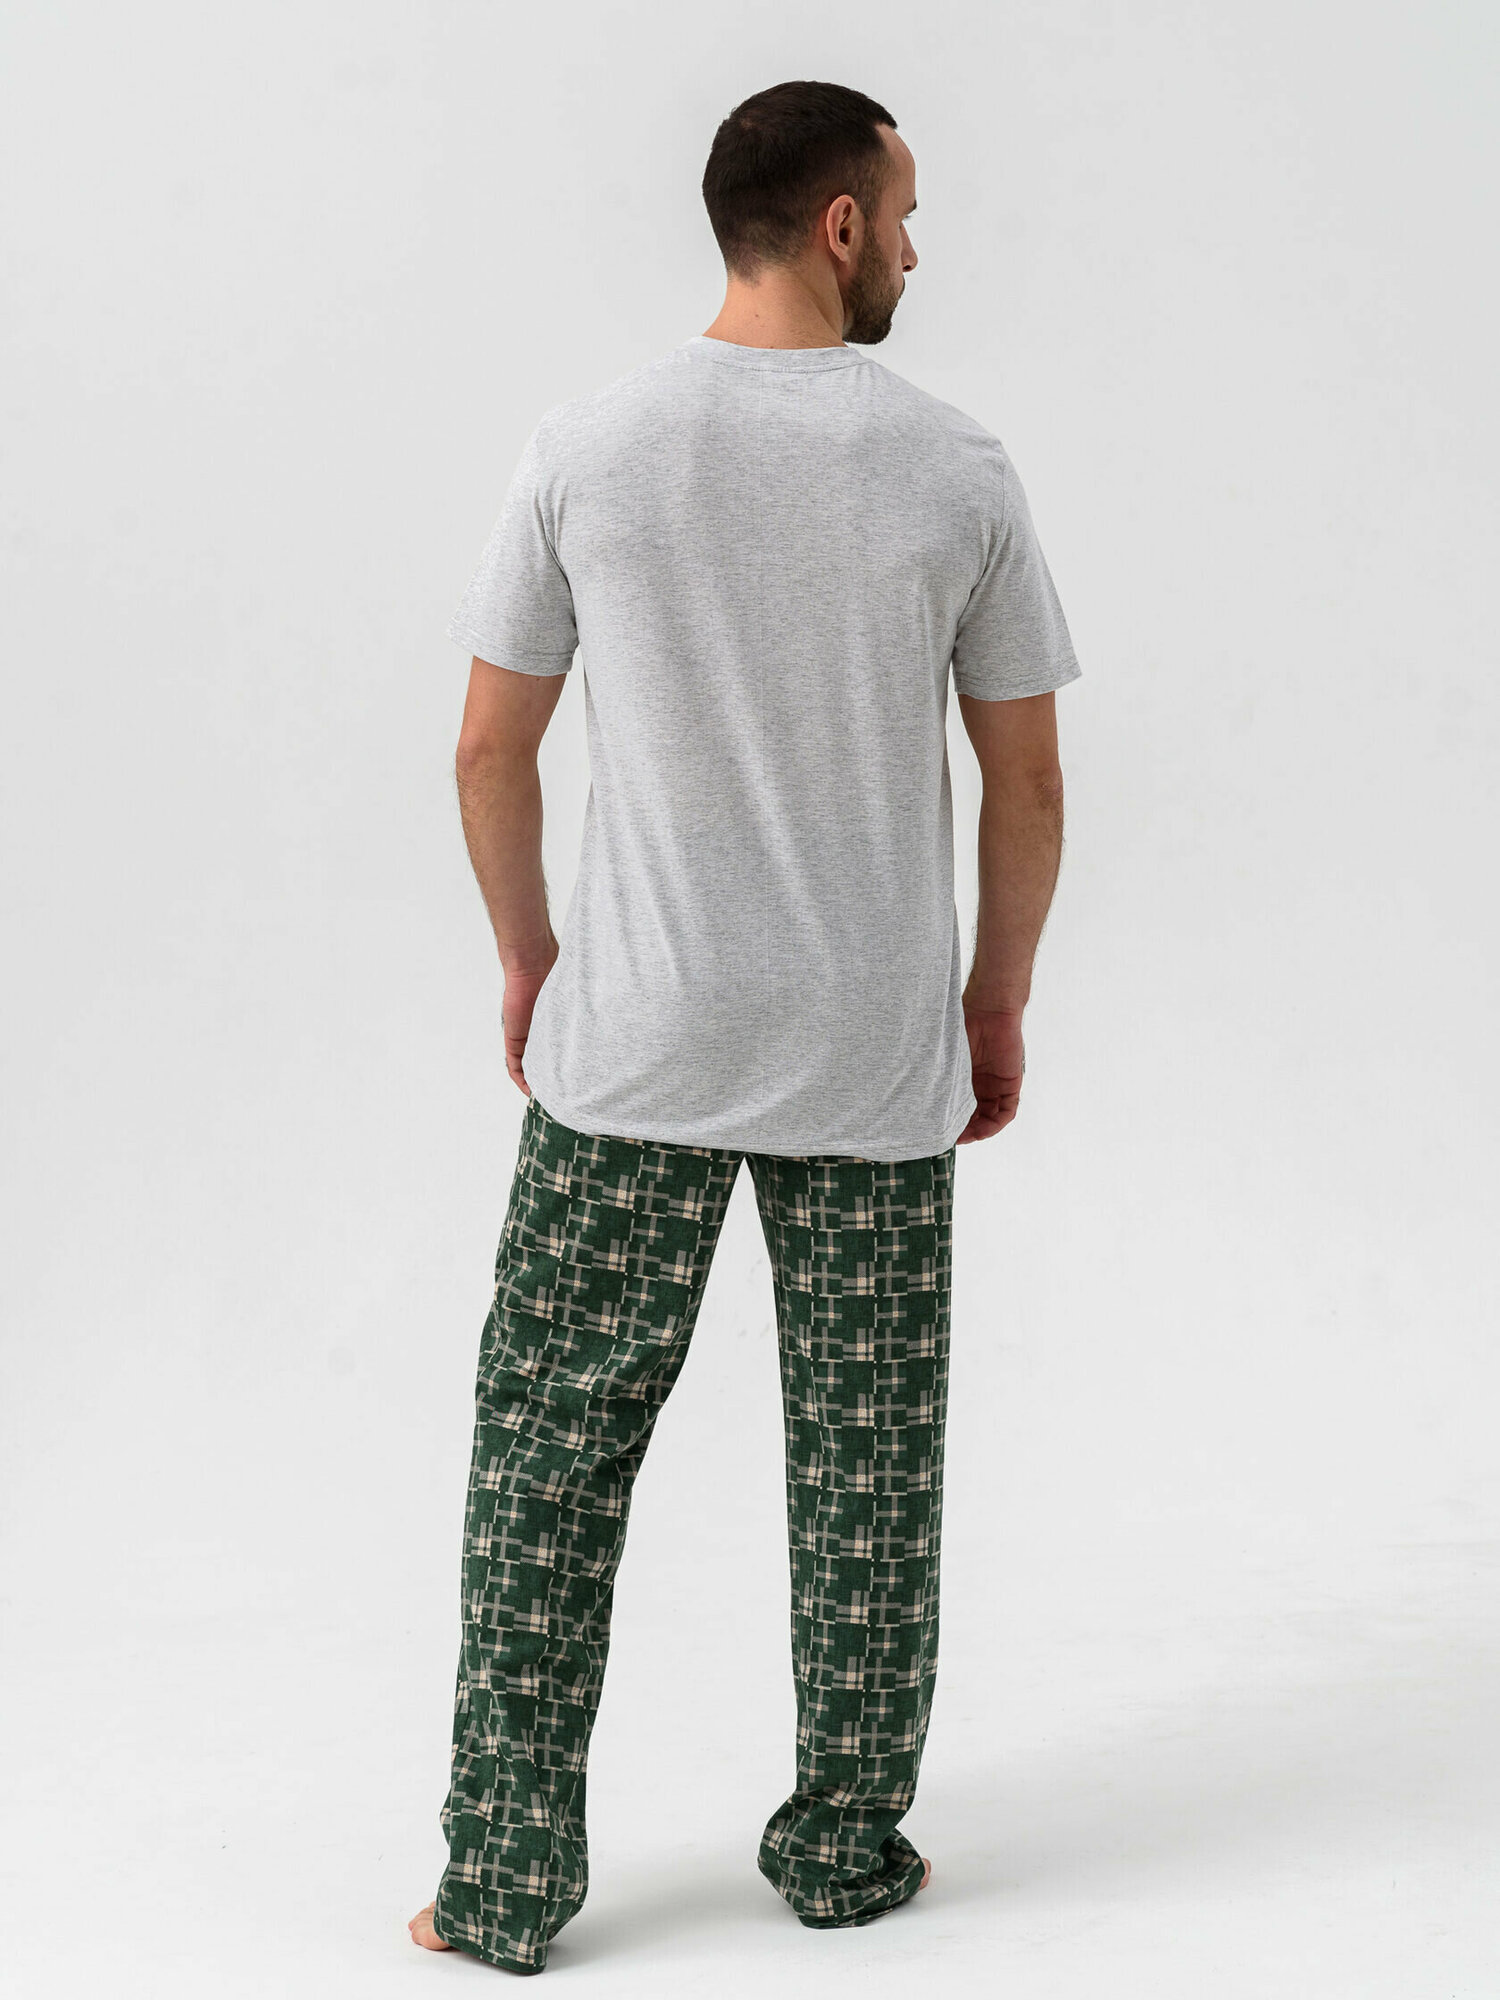 Мужская пижама Капибара Зеленый 50 Кулирка Оптима трикотаж - фотография № 4